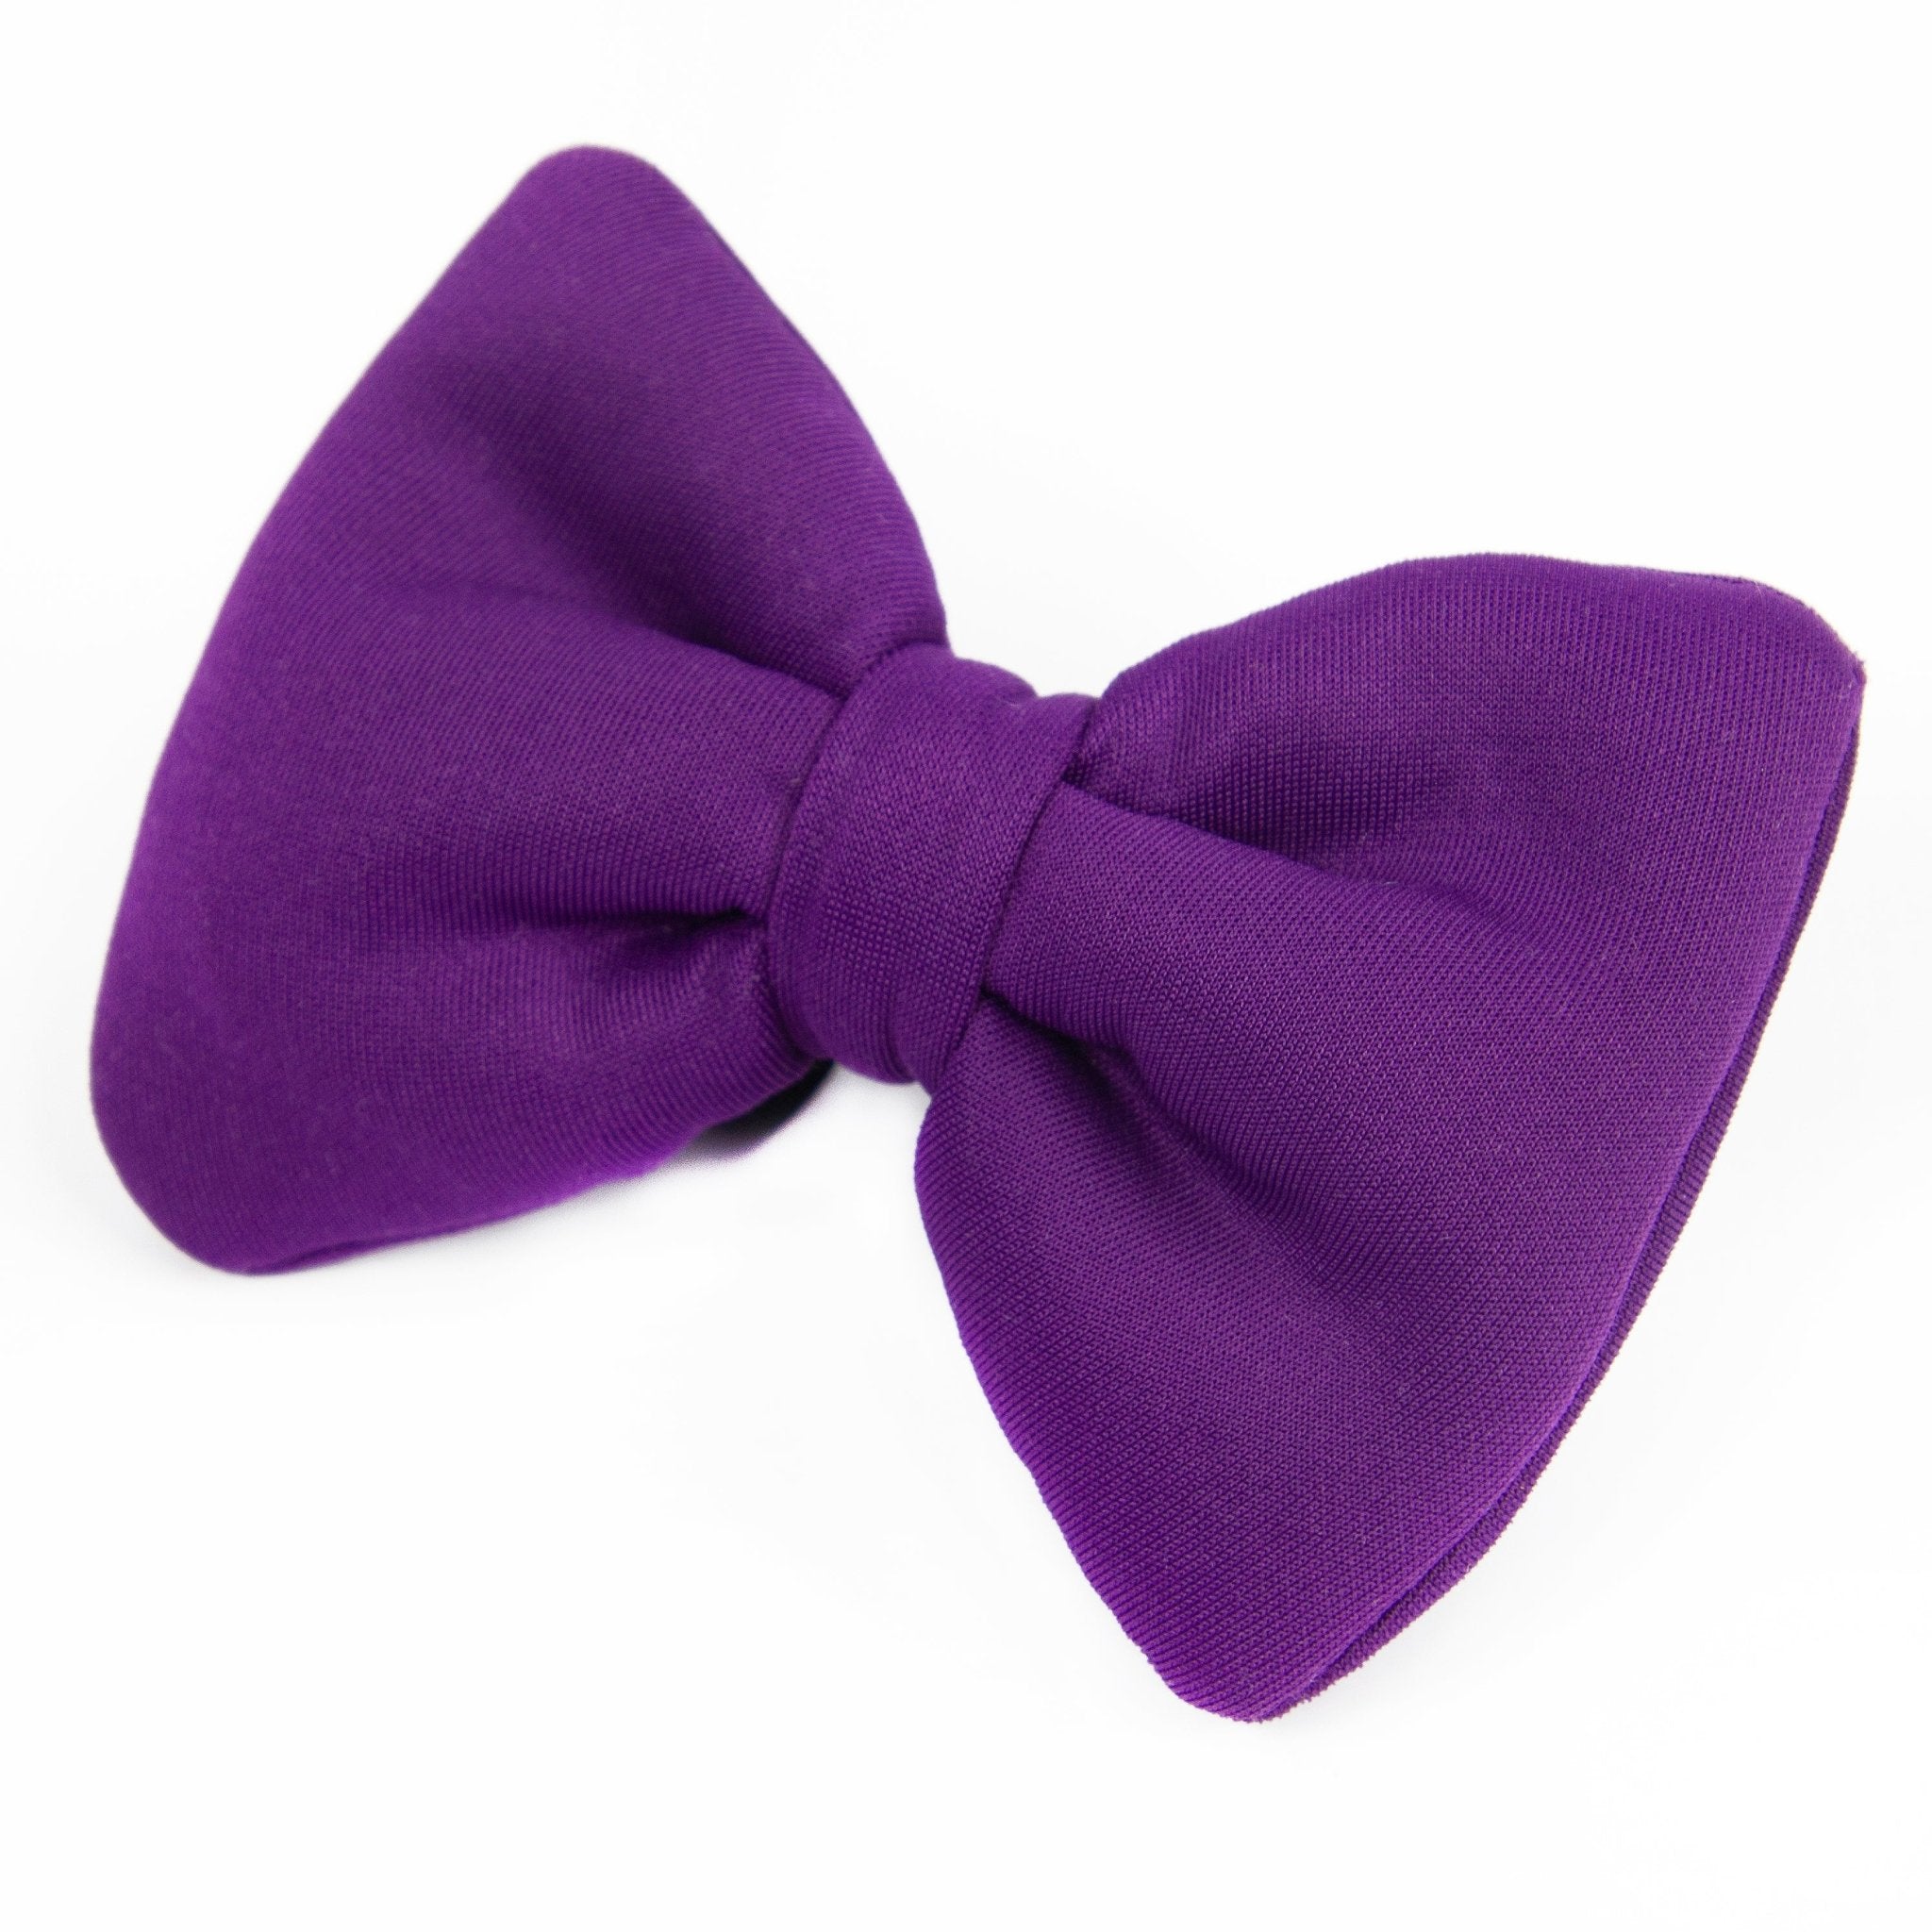 Bow Tie | Passionately Purple - Dear Pet Company